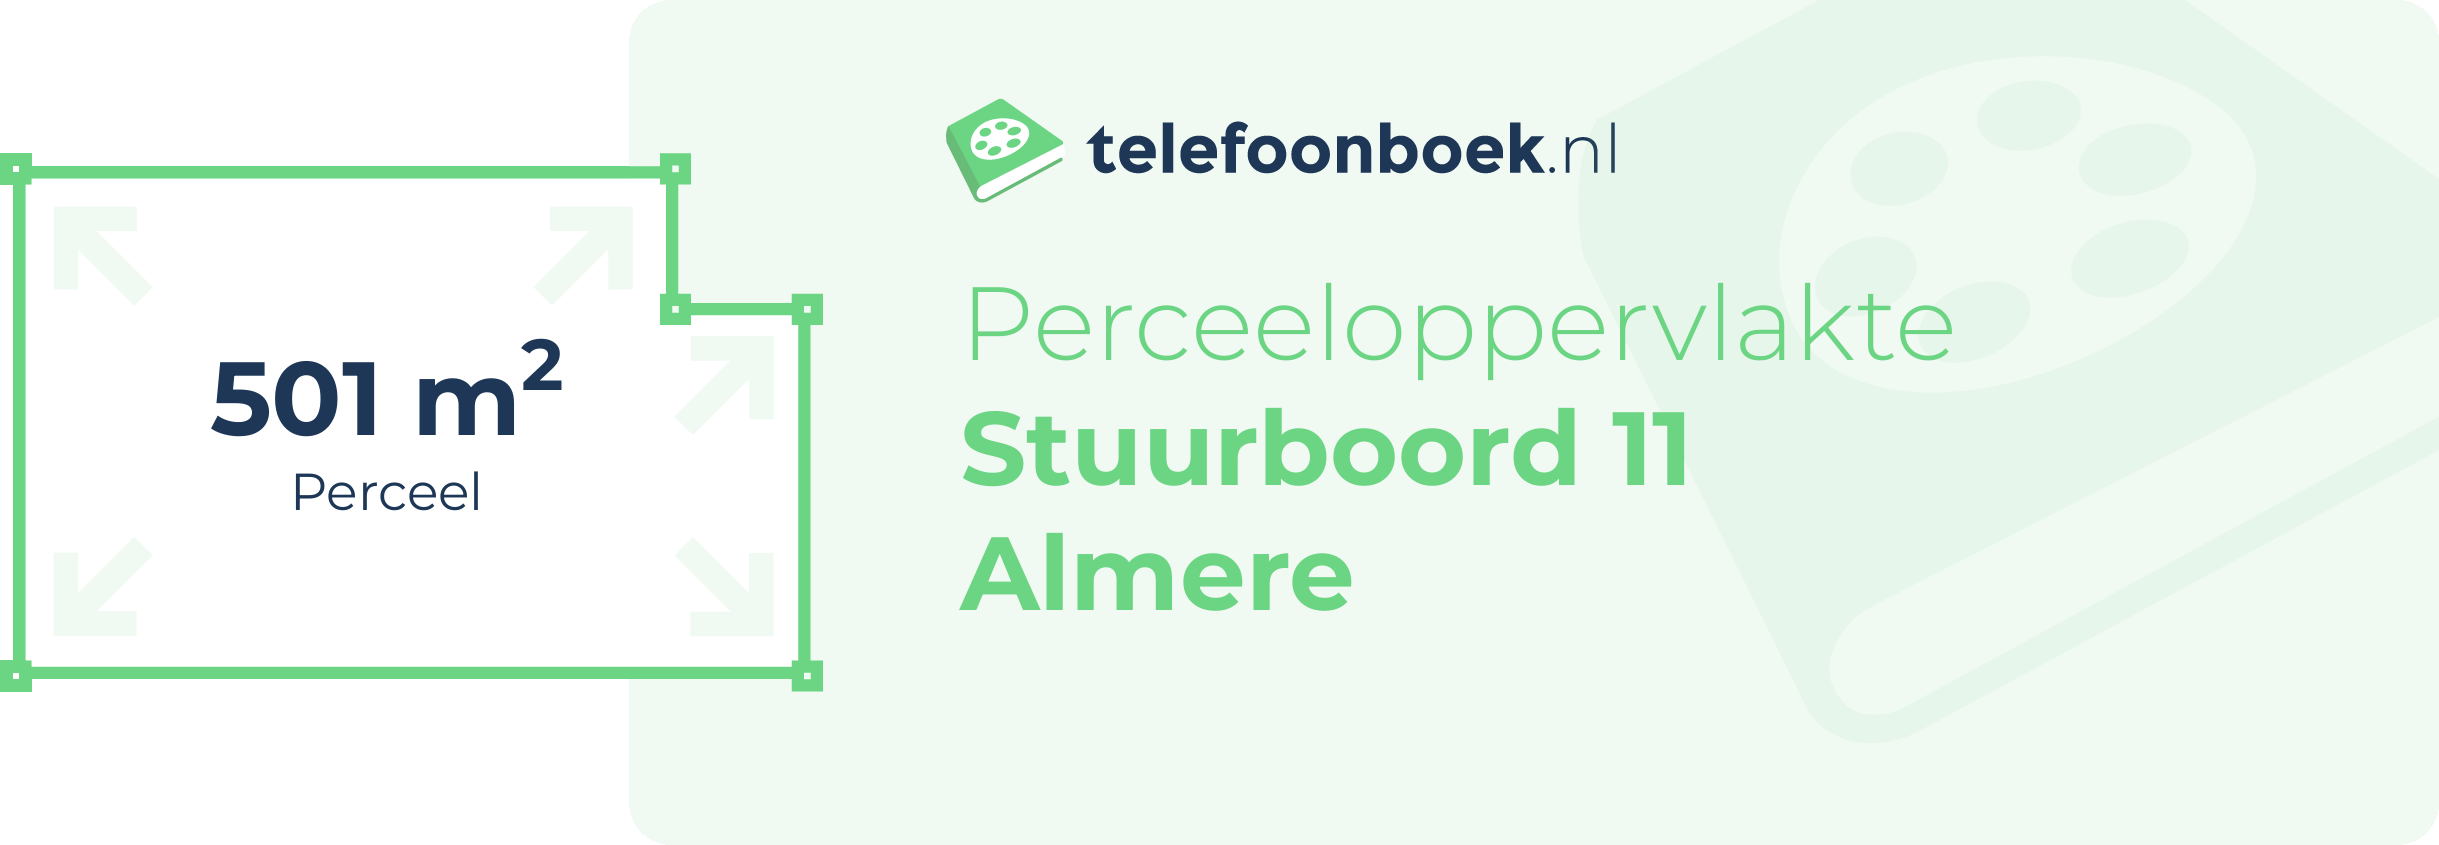 Perceeloppervlakte Stuurboord 11 Almere